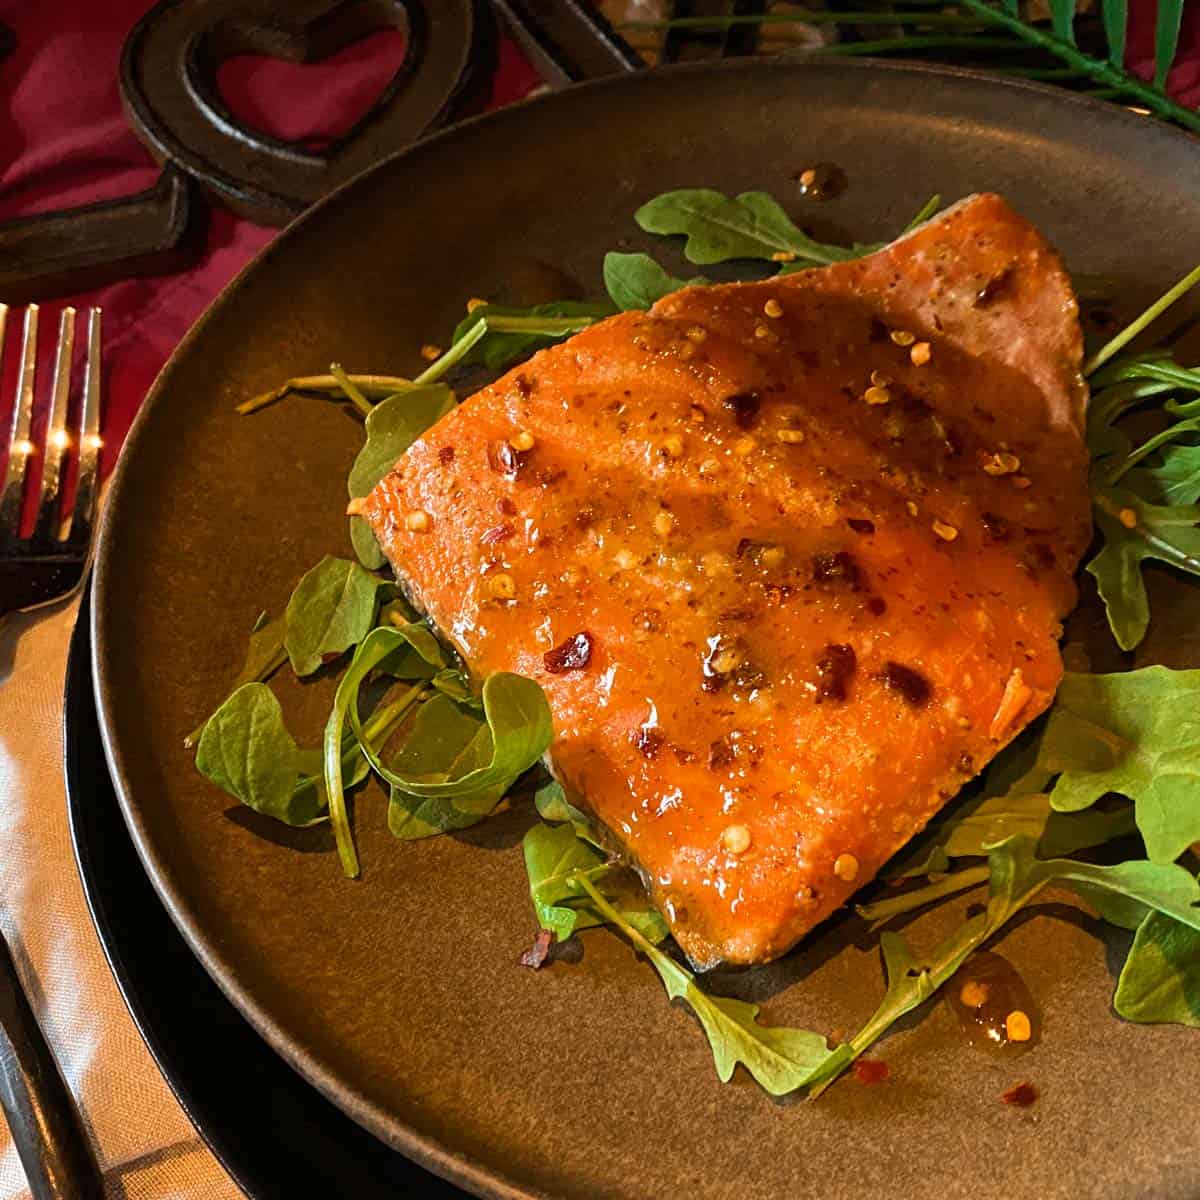 Grilled salmon on cedar plank with maple dijon glaze on a brown plate.